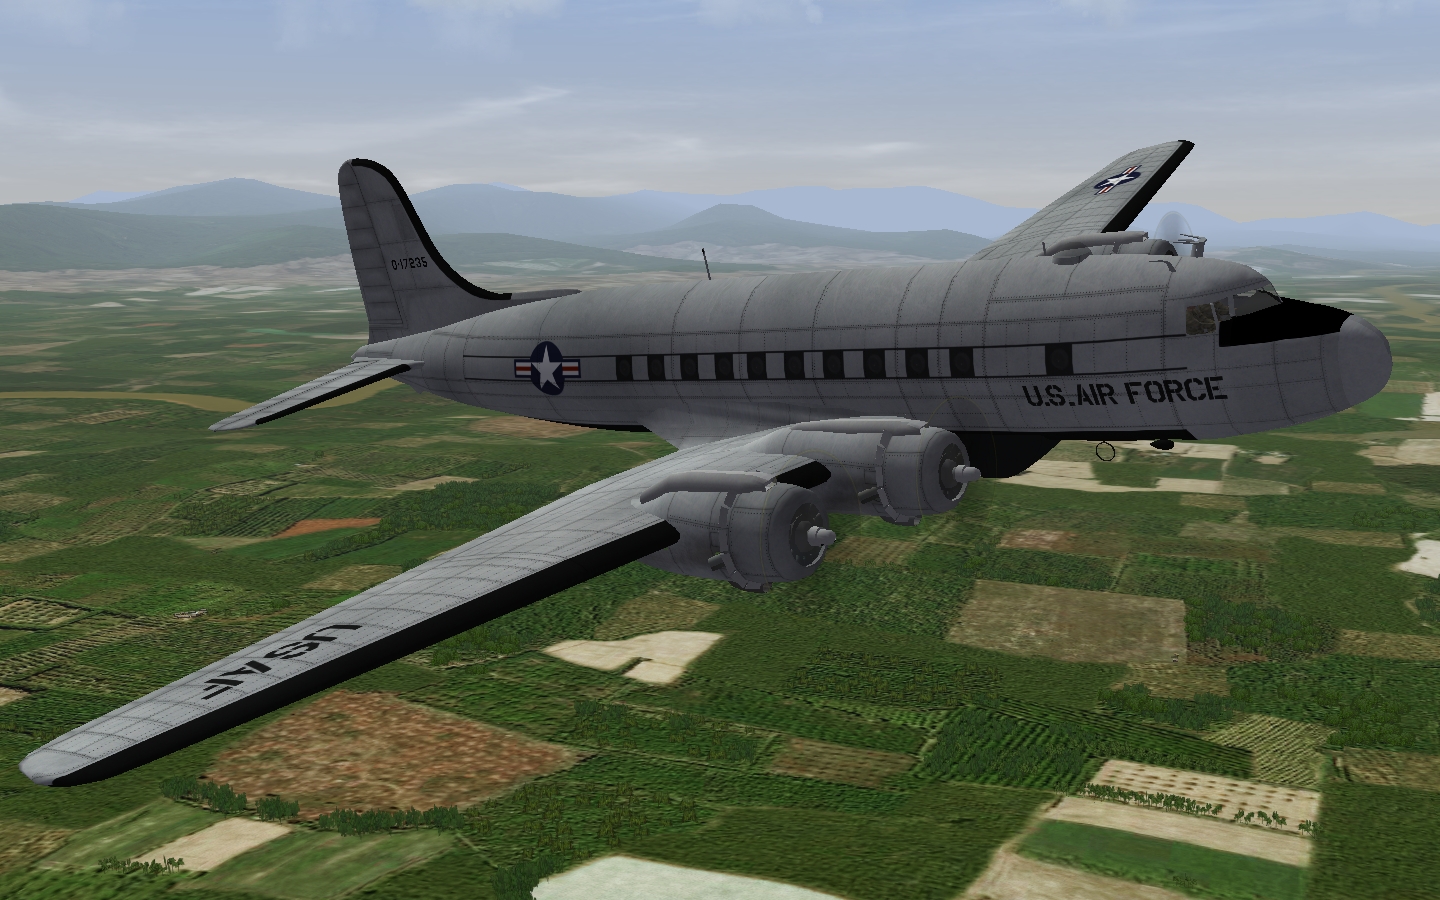 Big Safari: C-54D Hilo Hattie